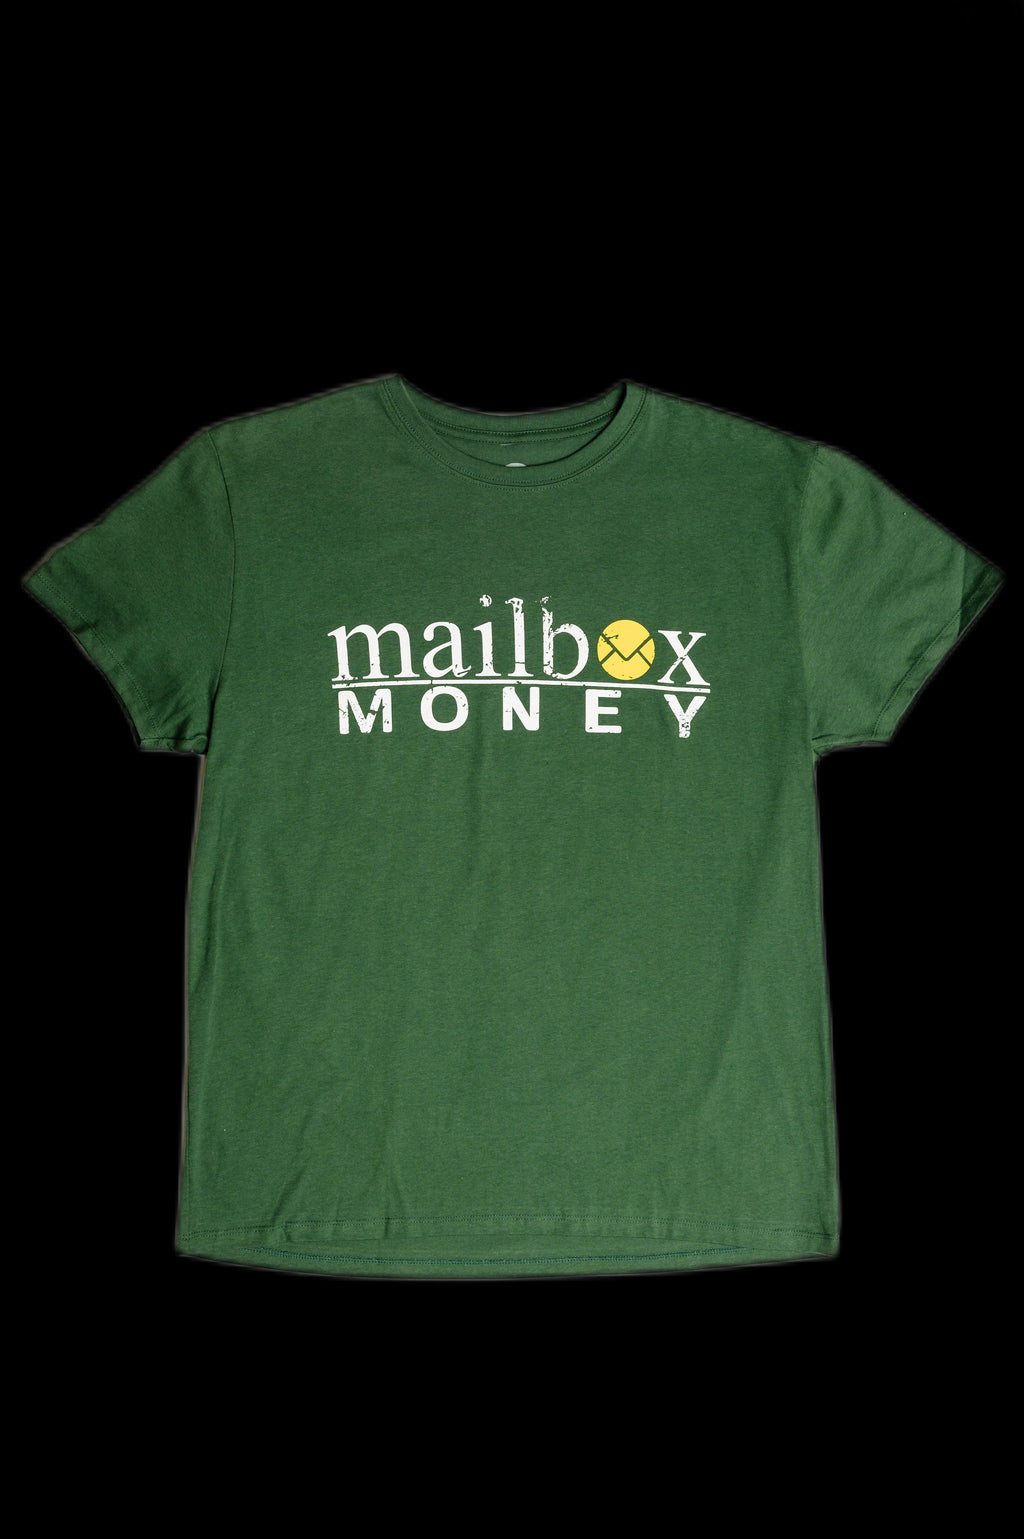 Money Store Official Mailbox – Classic Members (Green) T-Shirt